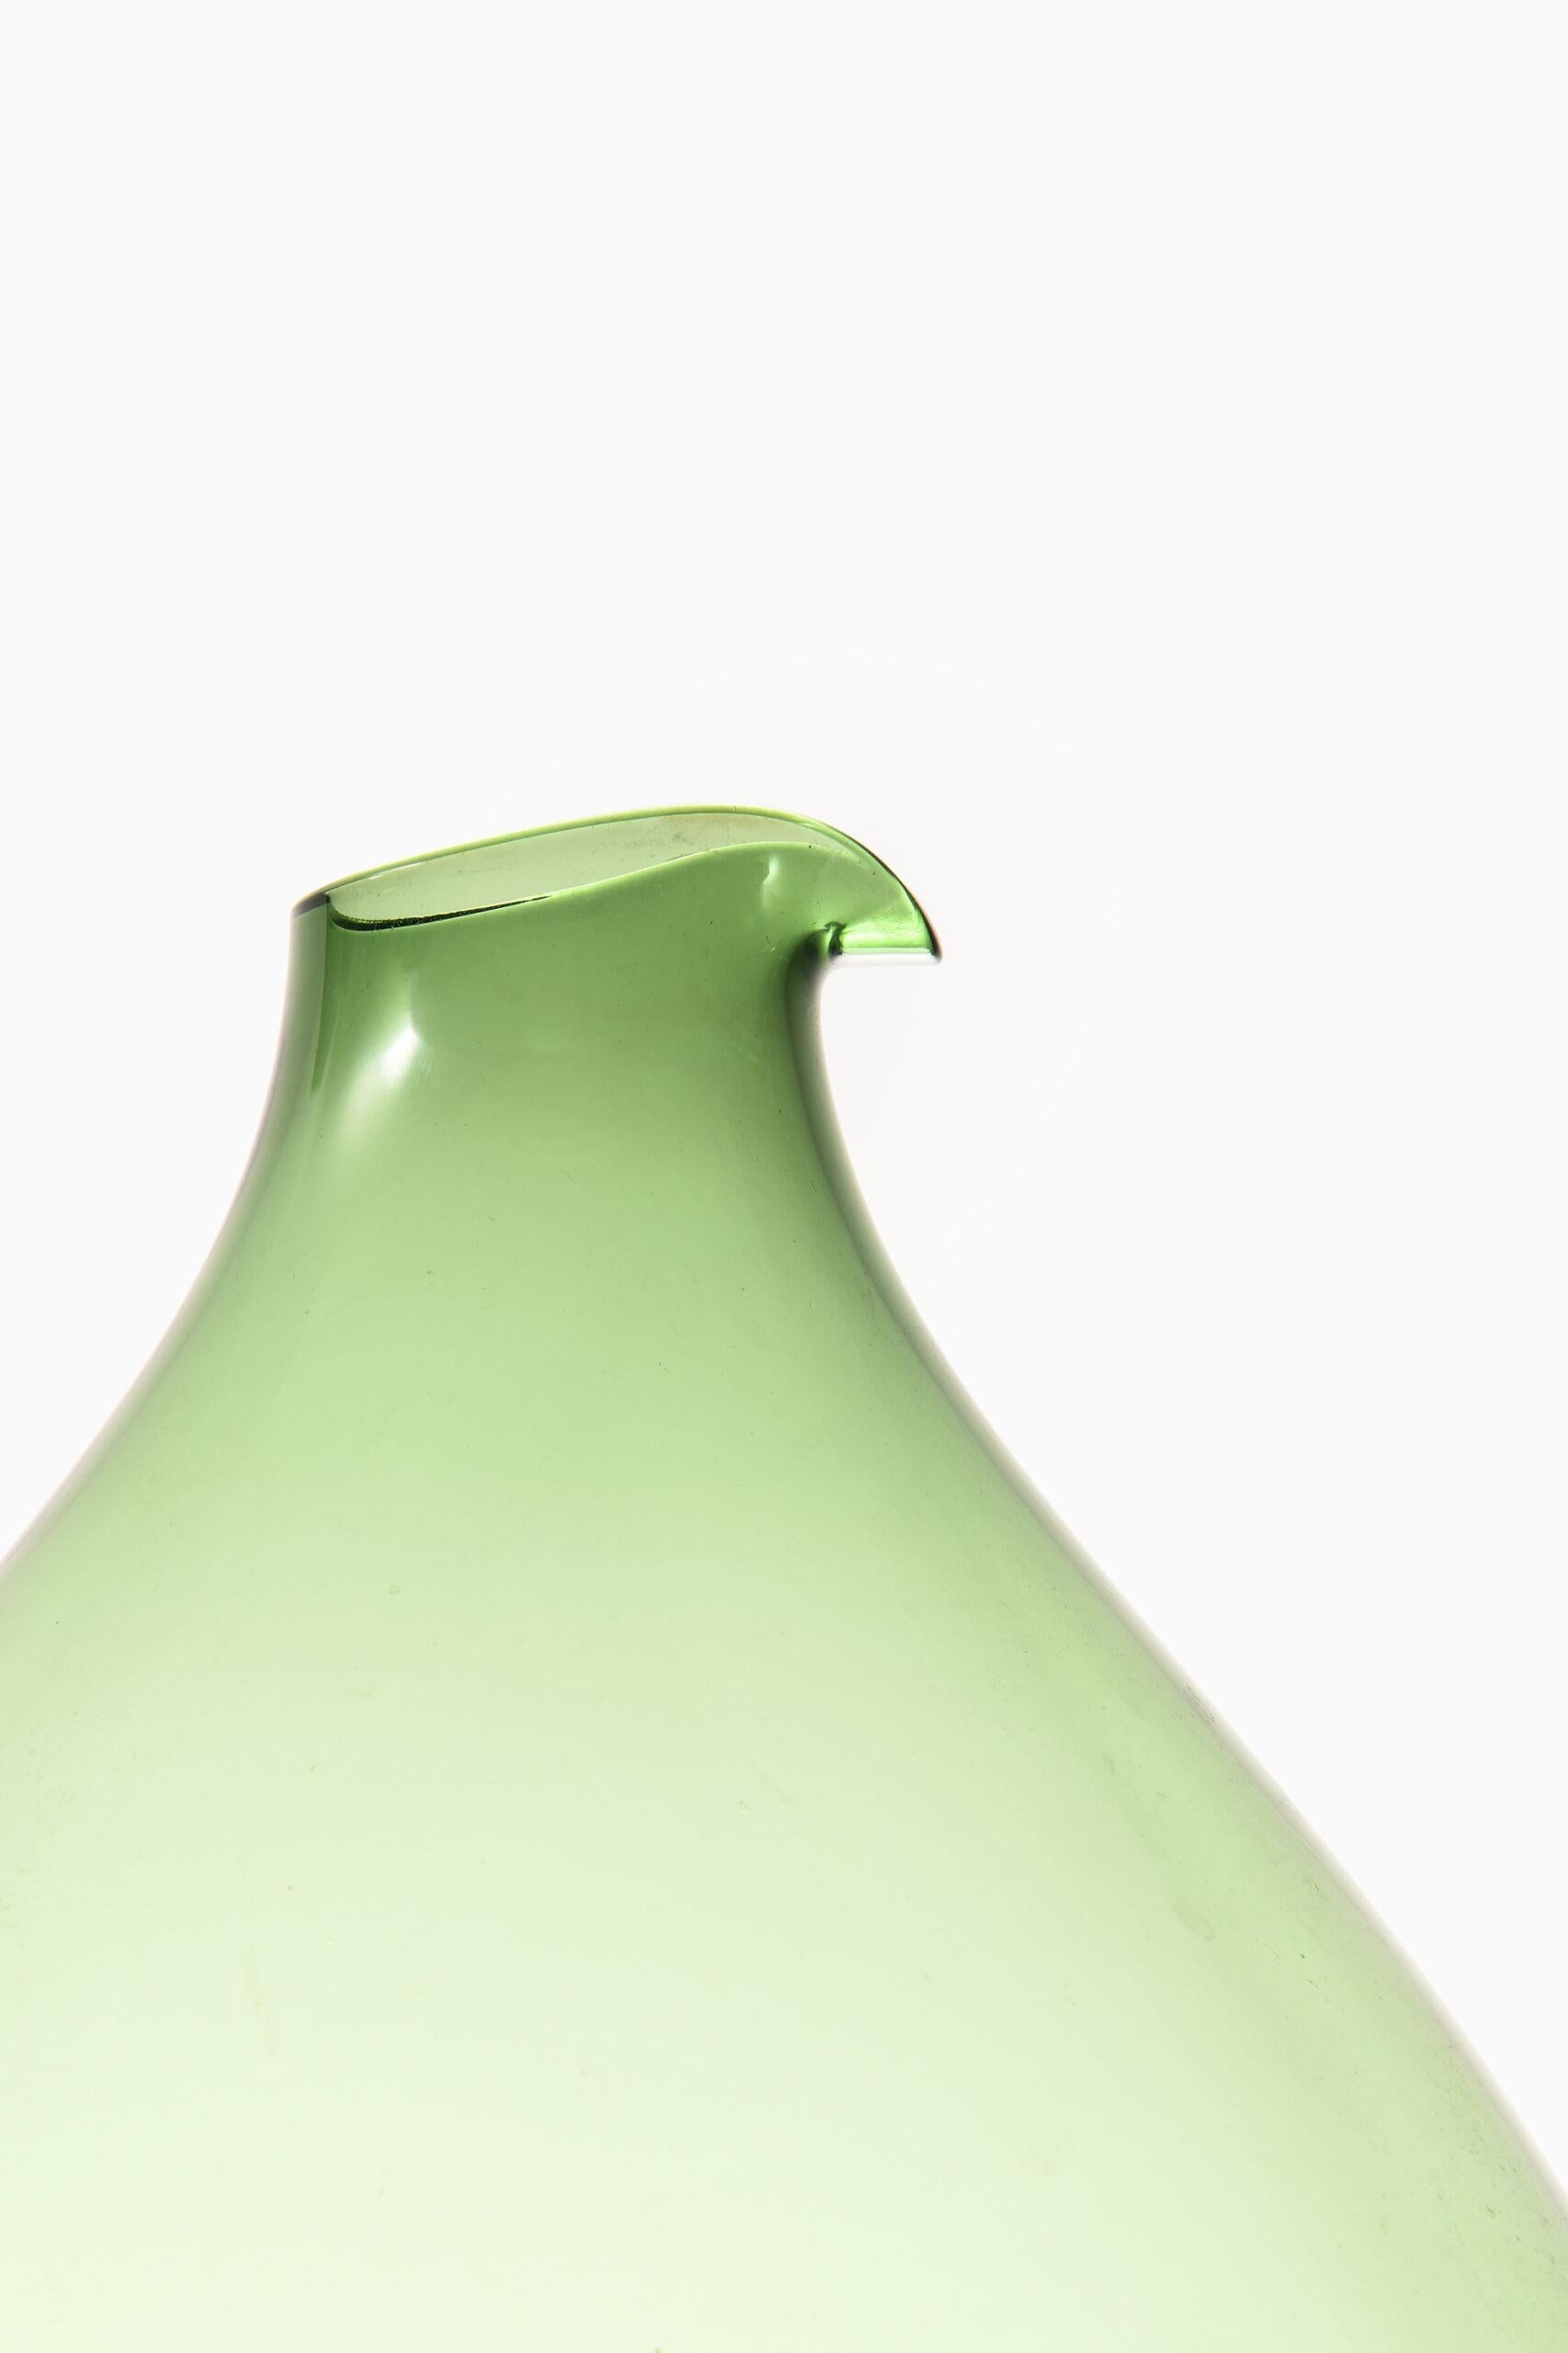 Rare et grand vase en verre conçu par Kjell Blomberg. Produit par Gullaskruf en Suède.